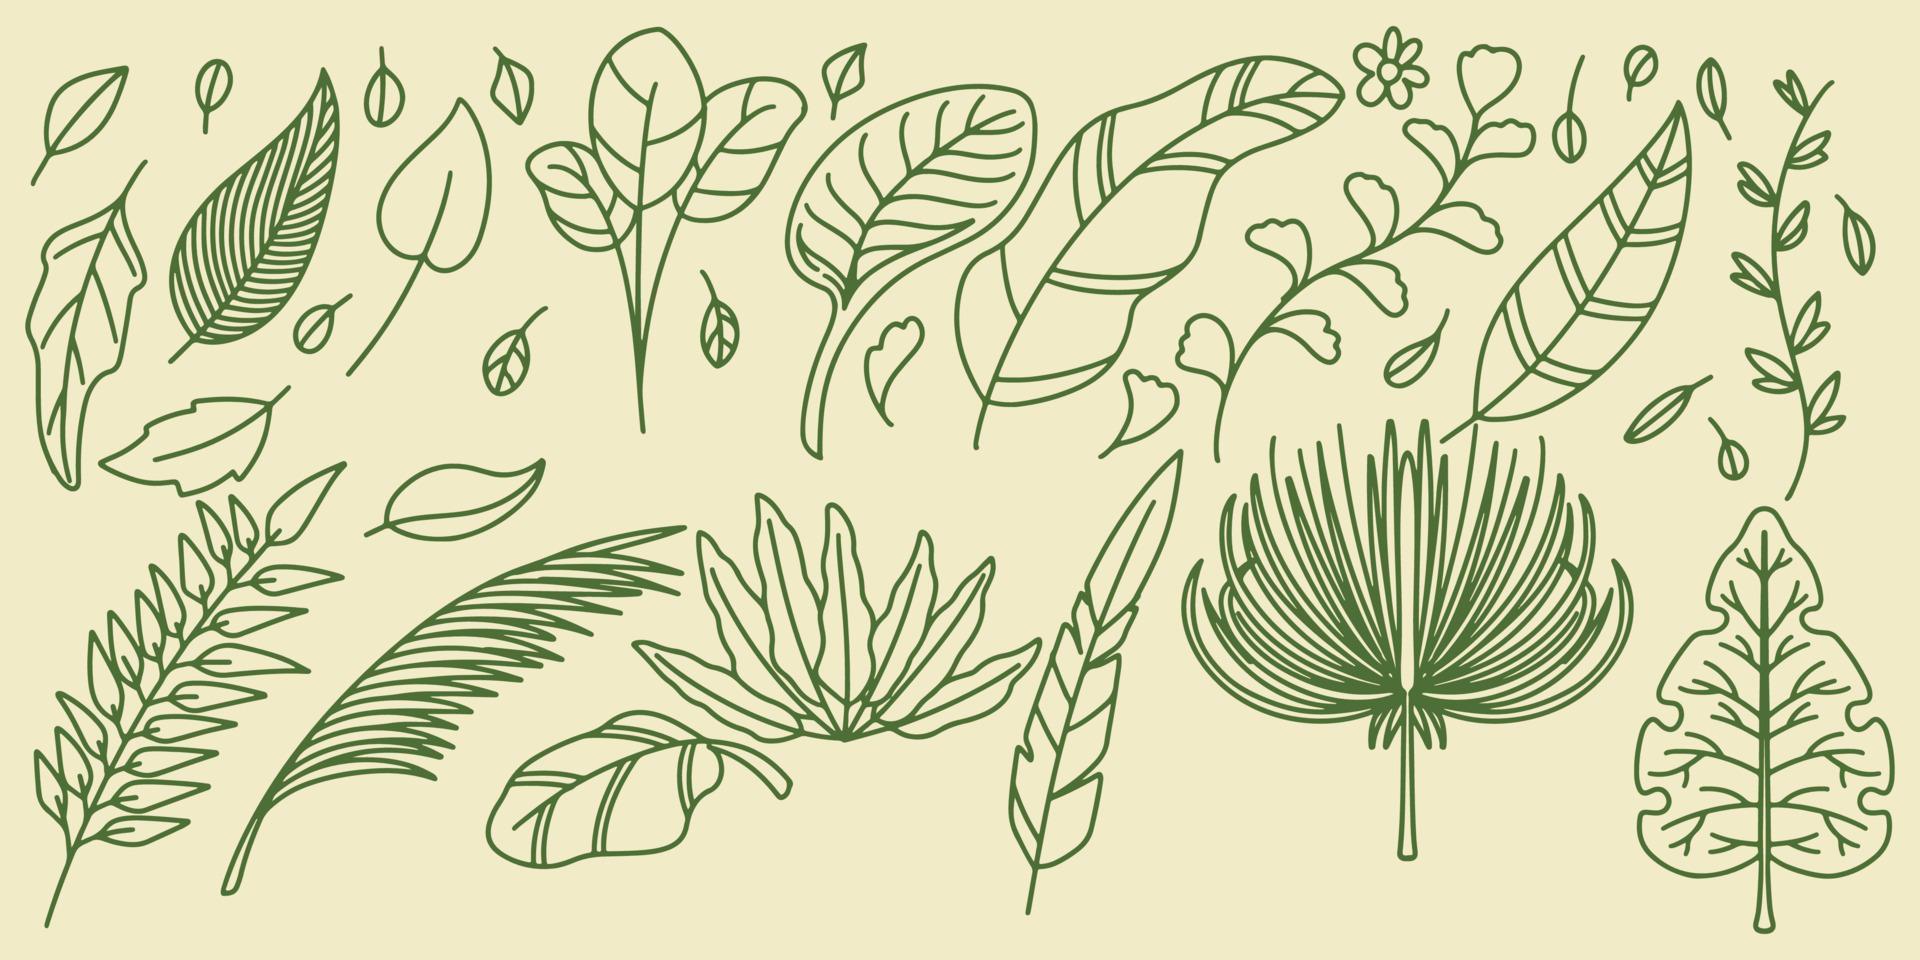 dieciséis mano dibujo conjunto floral botánico helecho bosque elementos vector